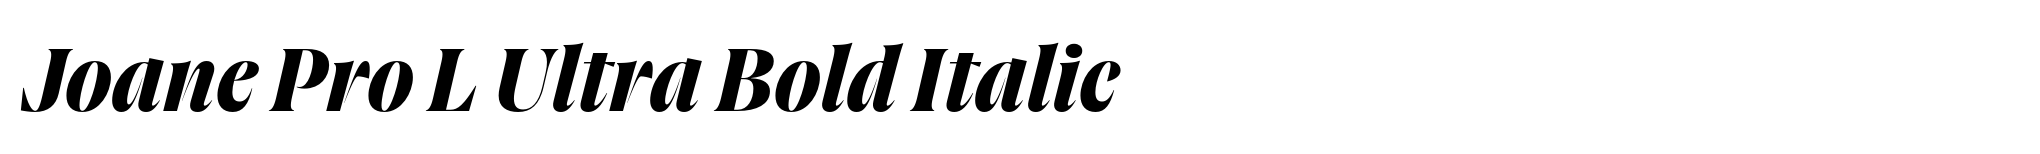 Joane Pro L Ultra Bold Italic image